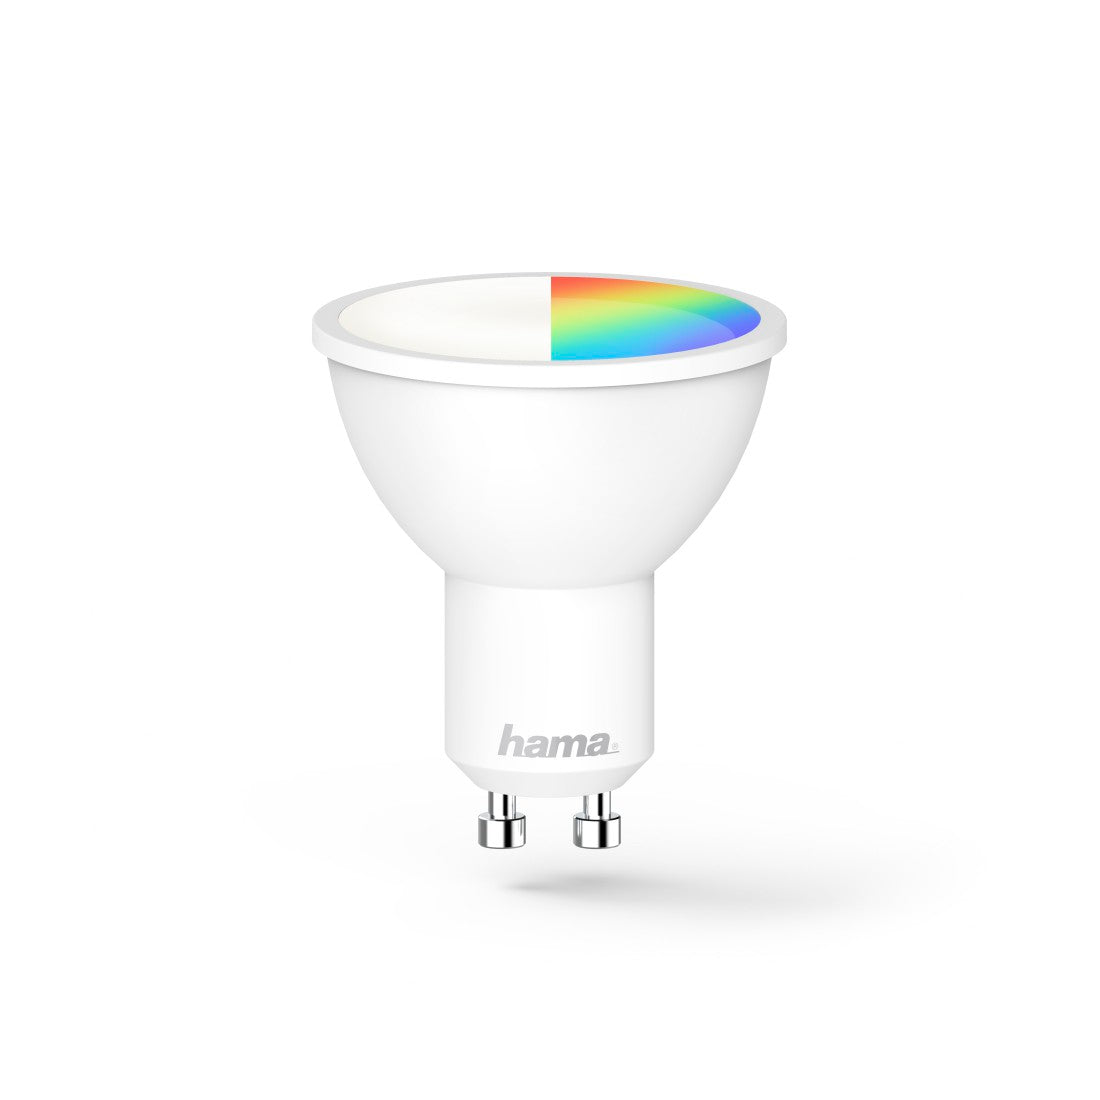 Hama WLAN-LED-Lampe, GU10, 5,5W, RGBW, – für Elektro dimmbar, Pelkmann Refl., Sprach-/App